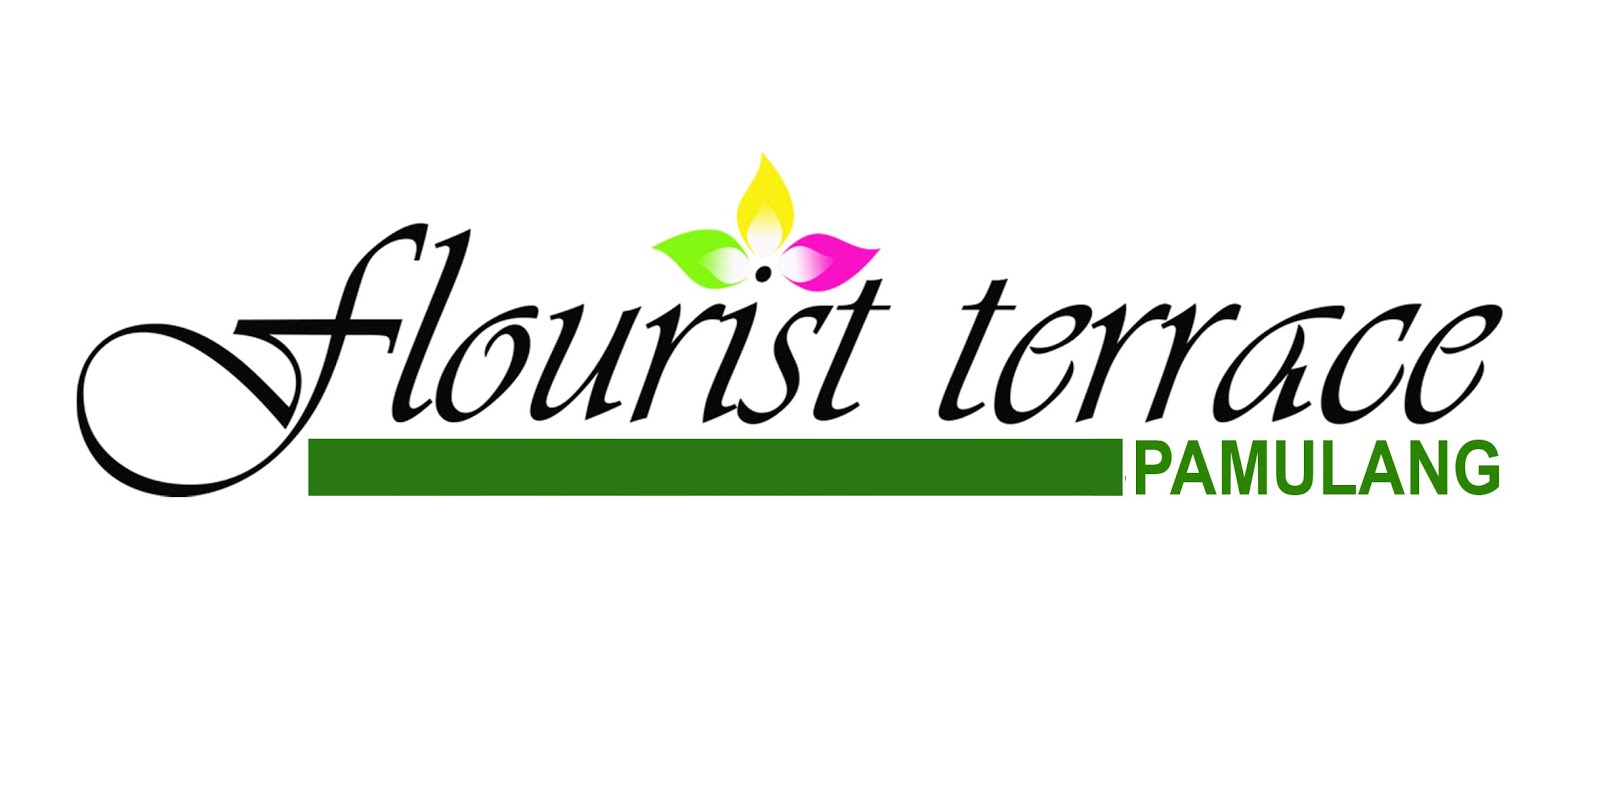 Cluster Flourist Terrace Pamulang